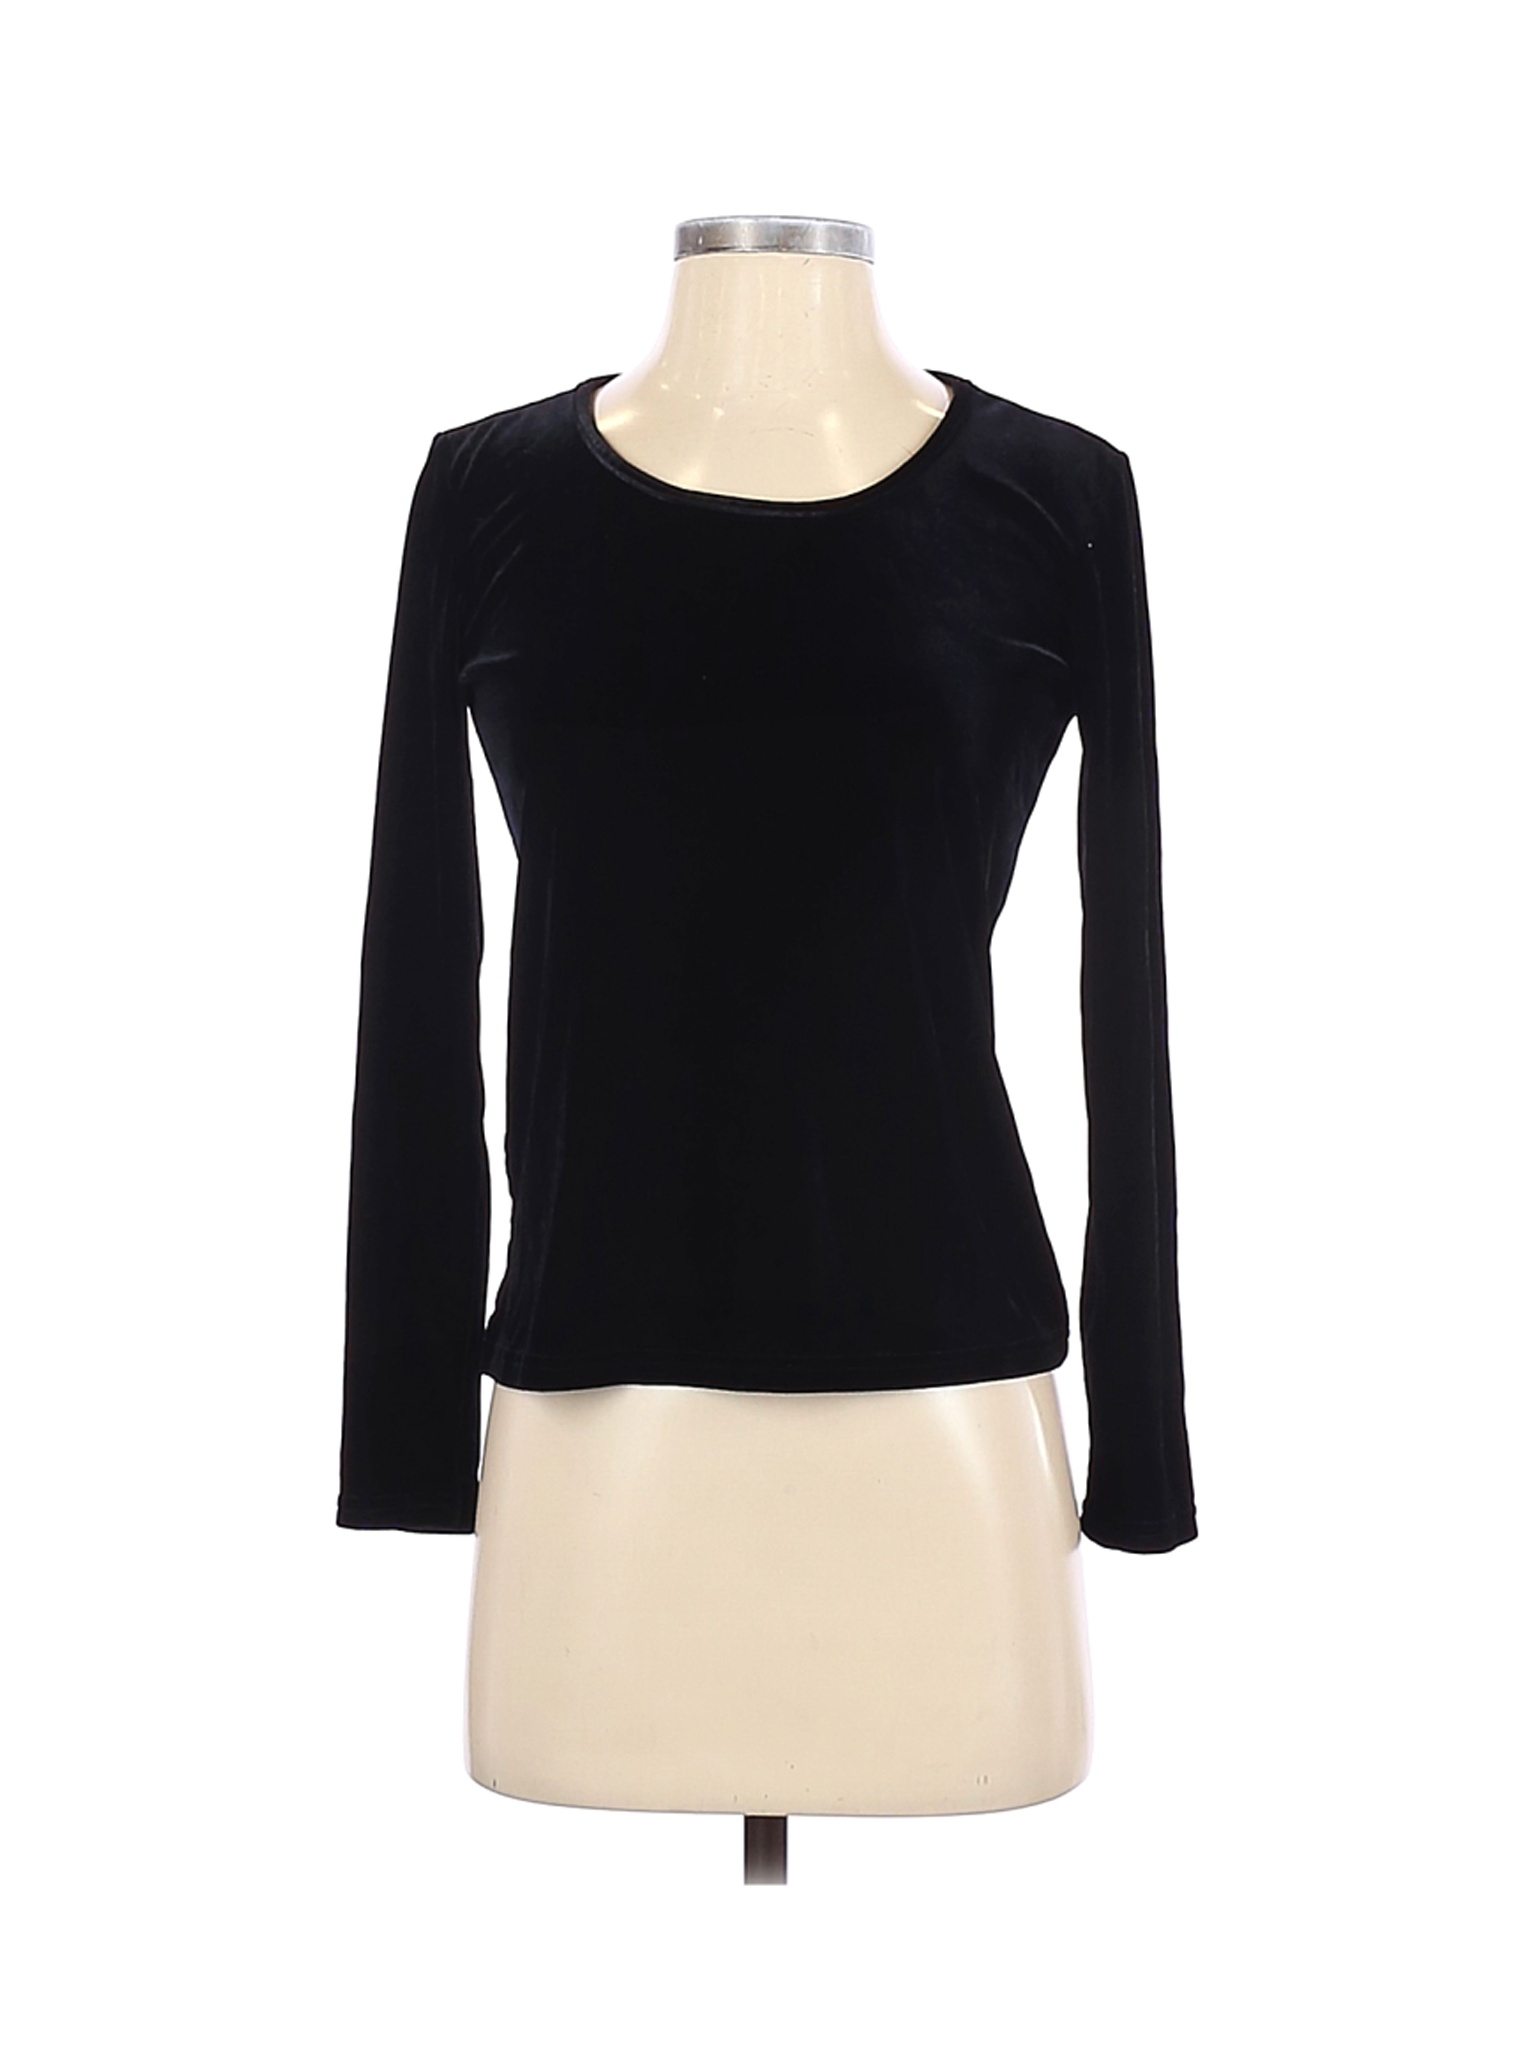 Gap Women Black Long Sleeve Top S | eBay